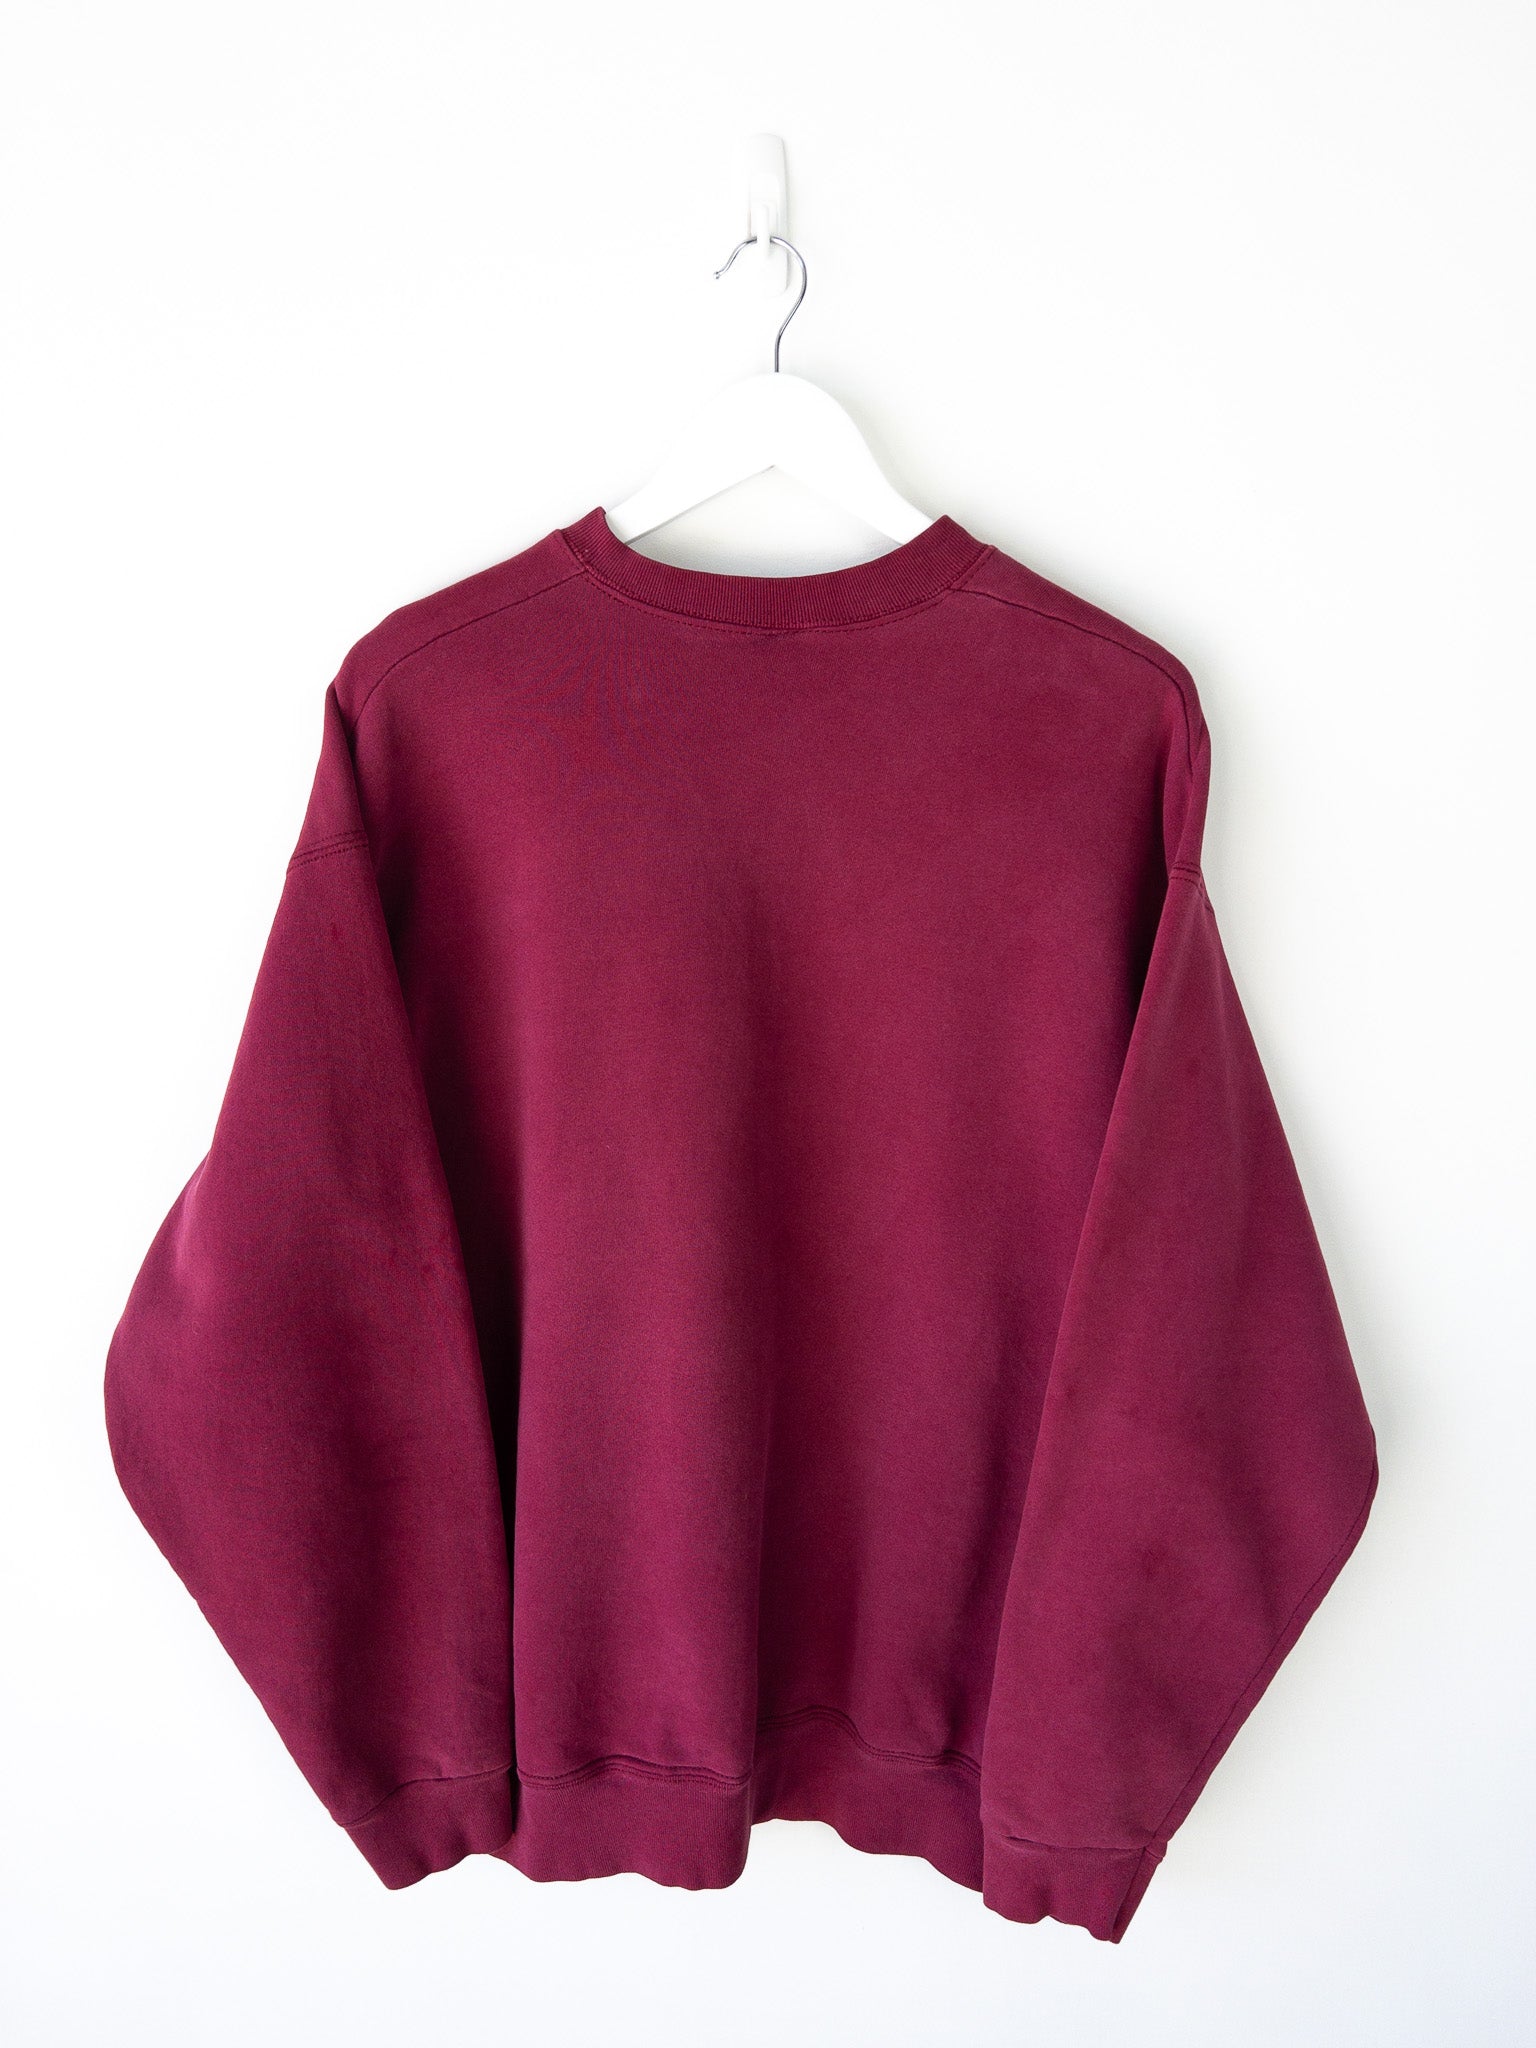 Vintage Oregon State 'Mom' Sweatshirt (XL)